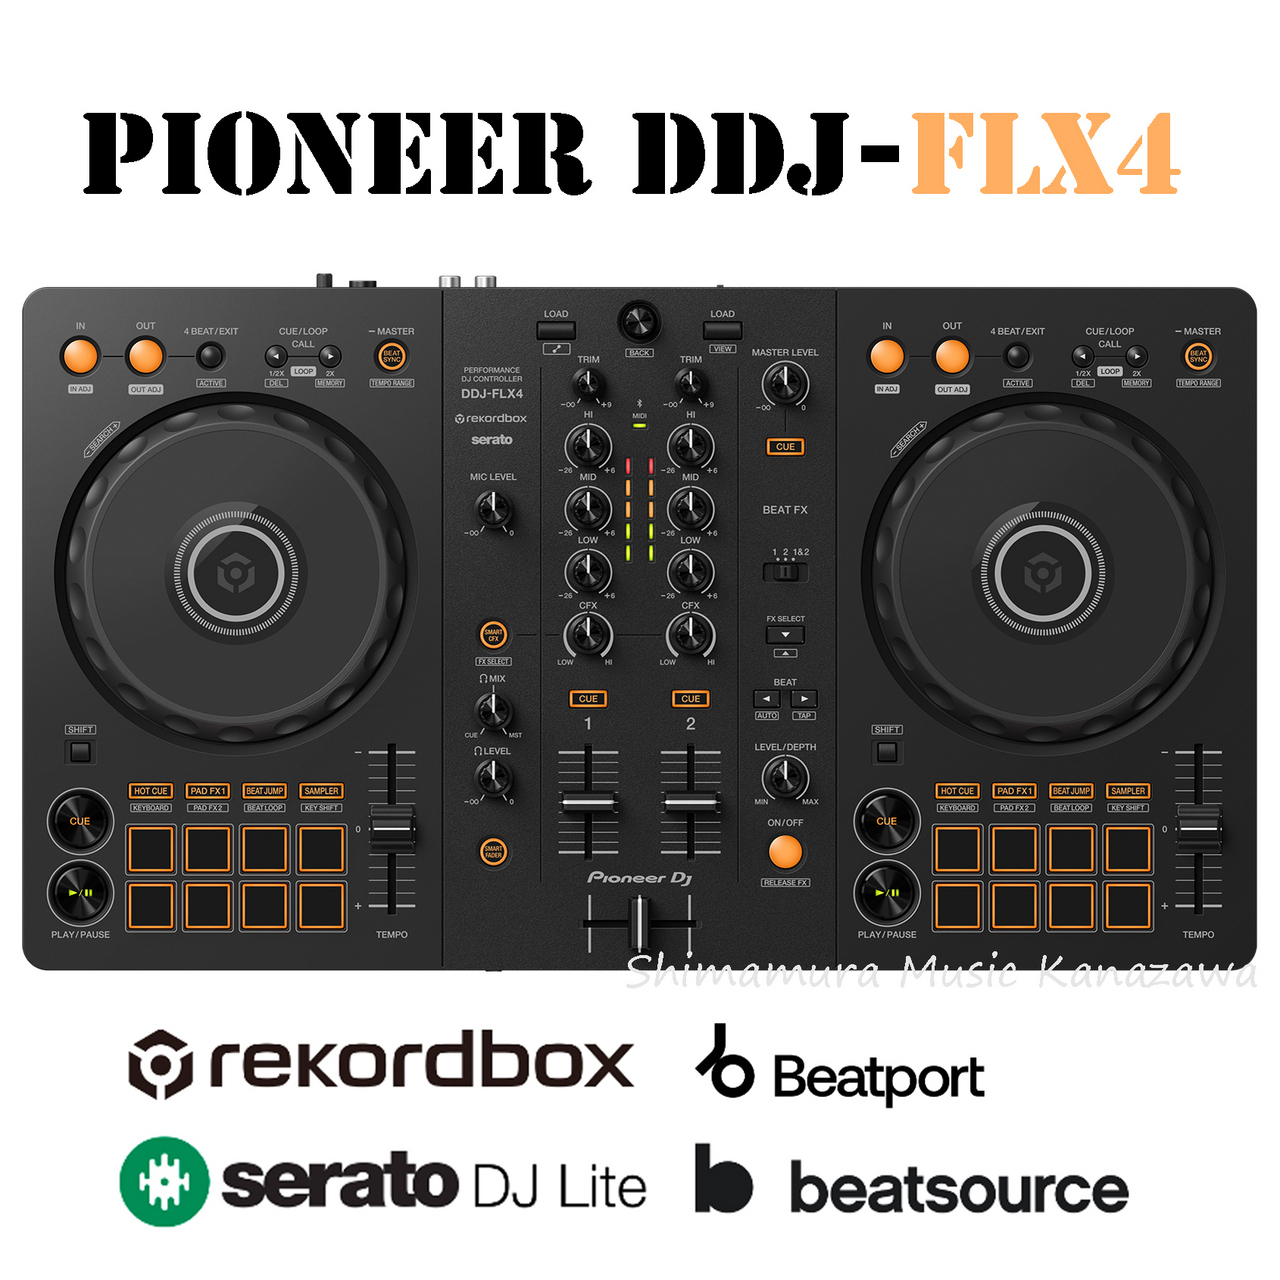 ddj-flx4 pioneerdj rekordbox seratodj本体元箱説明書USBーCコード